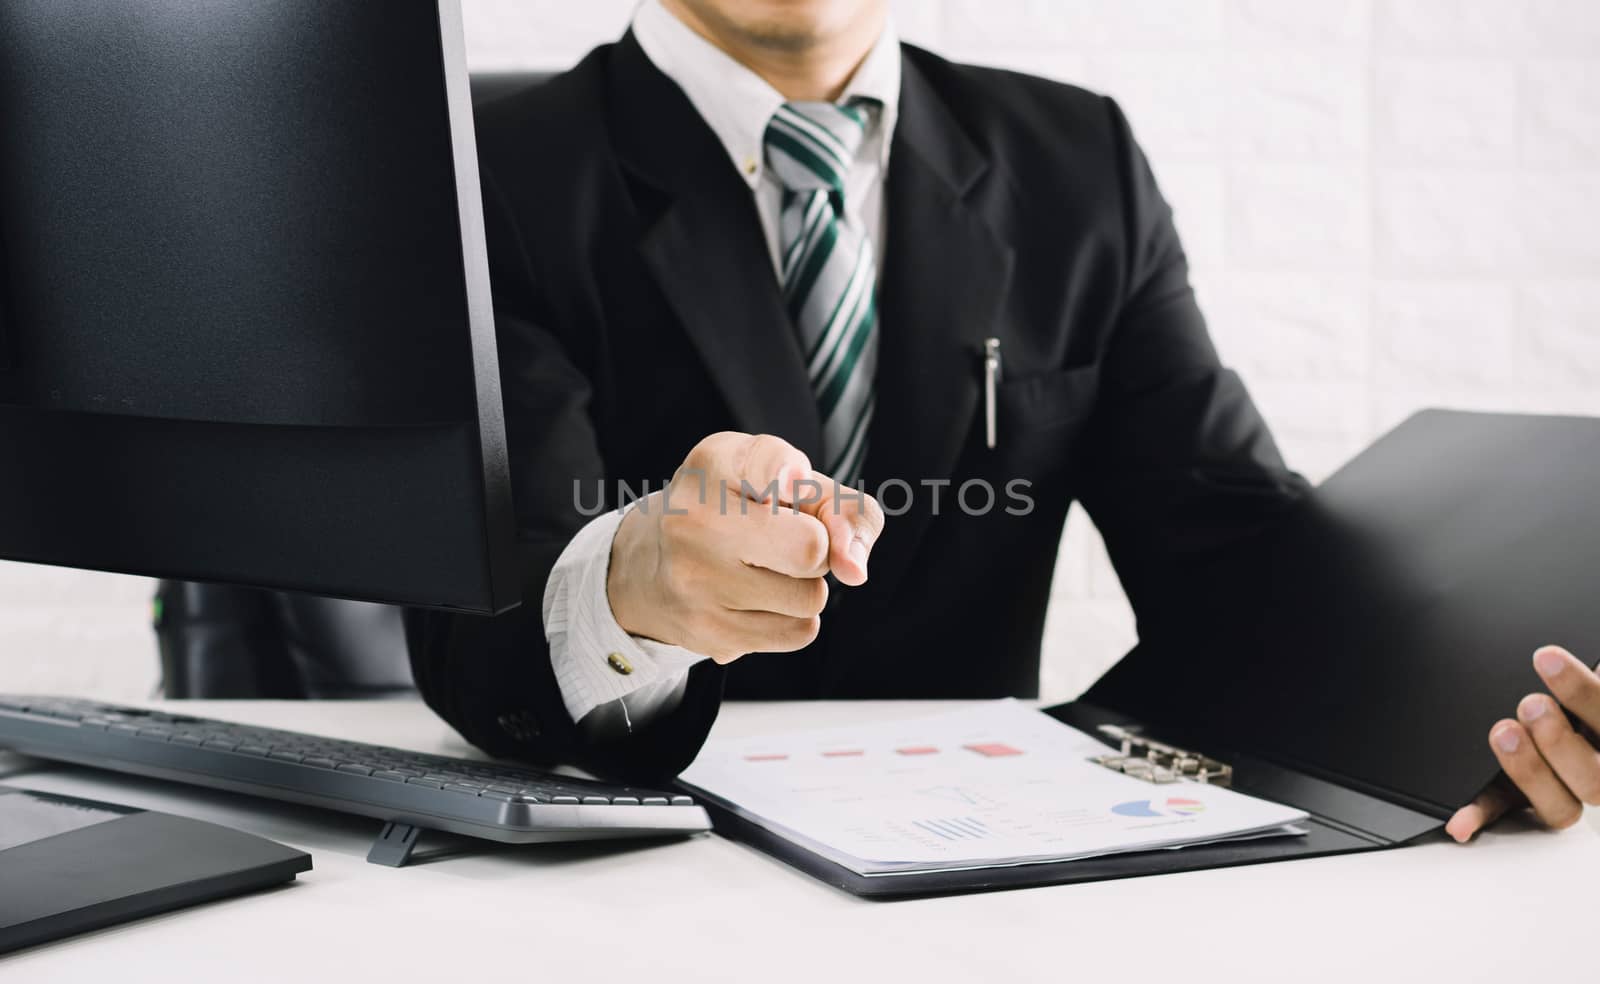 The boss business men pointing the finger on the desk 